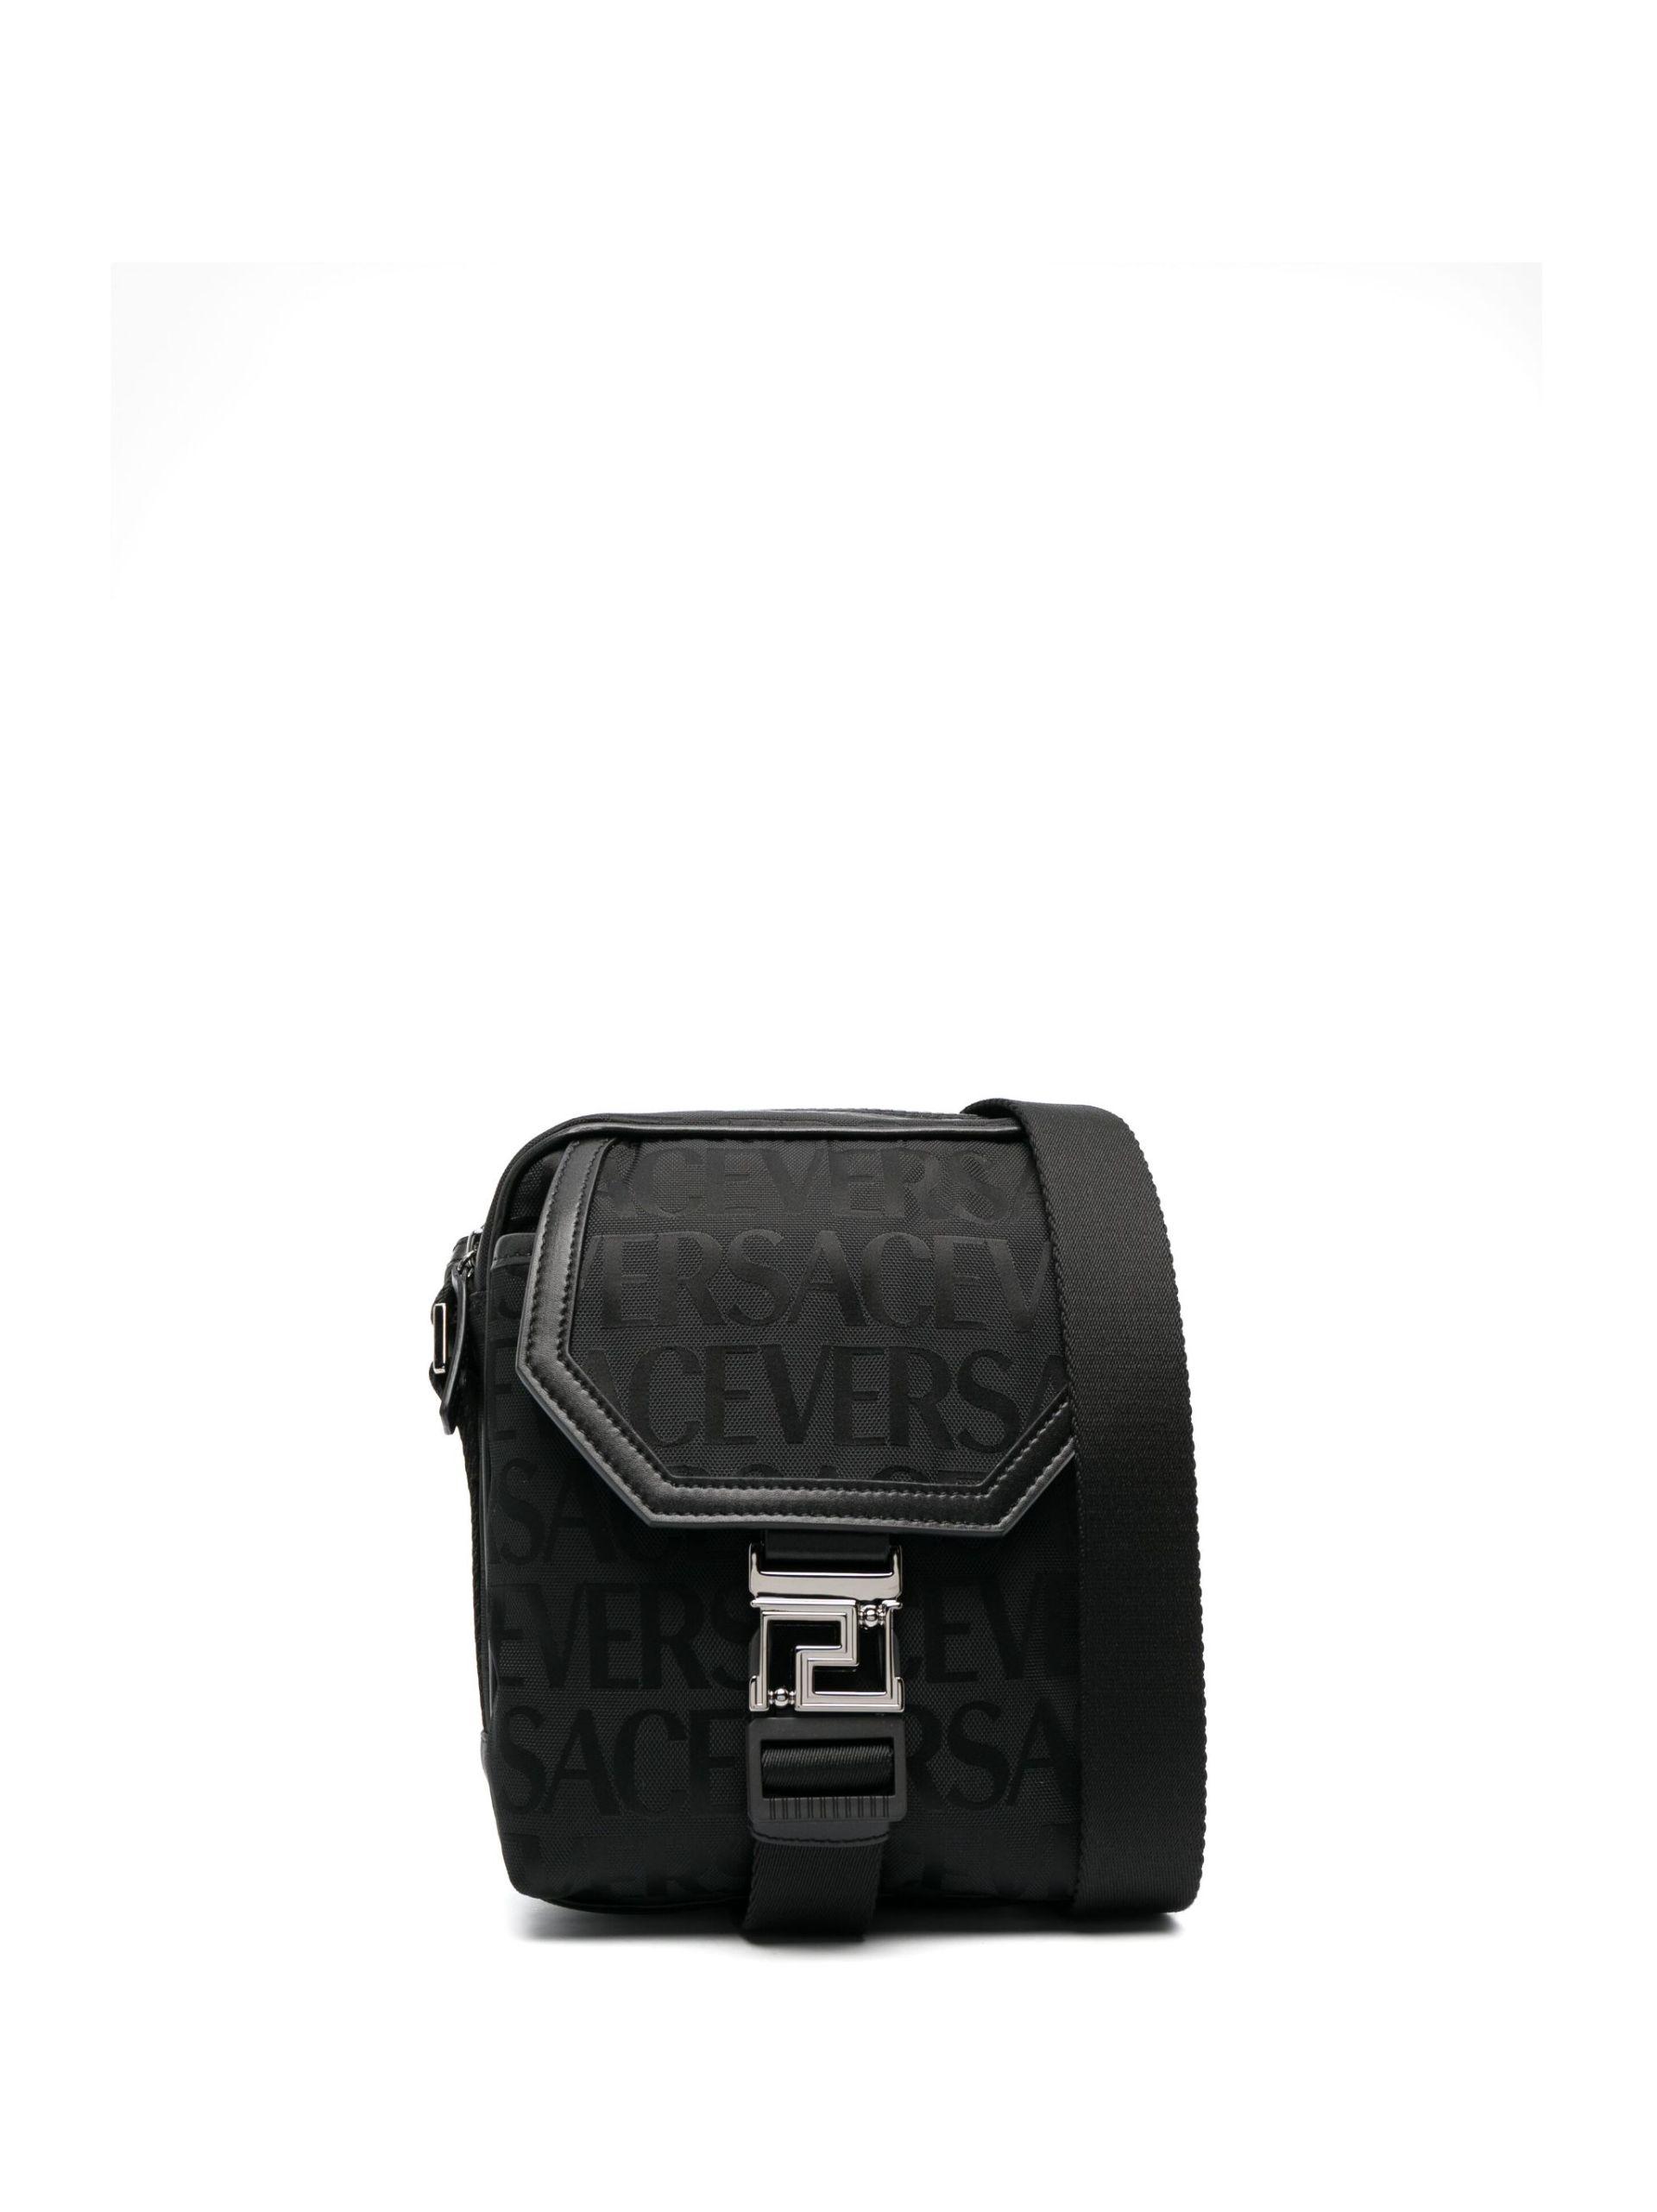 Men's Versace Allover Messenger Bag by Versace